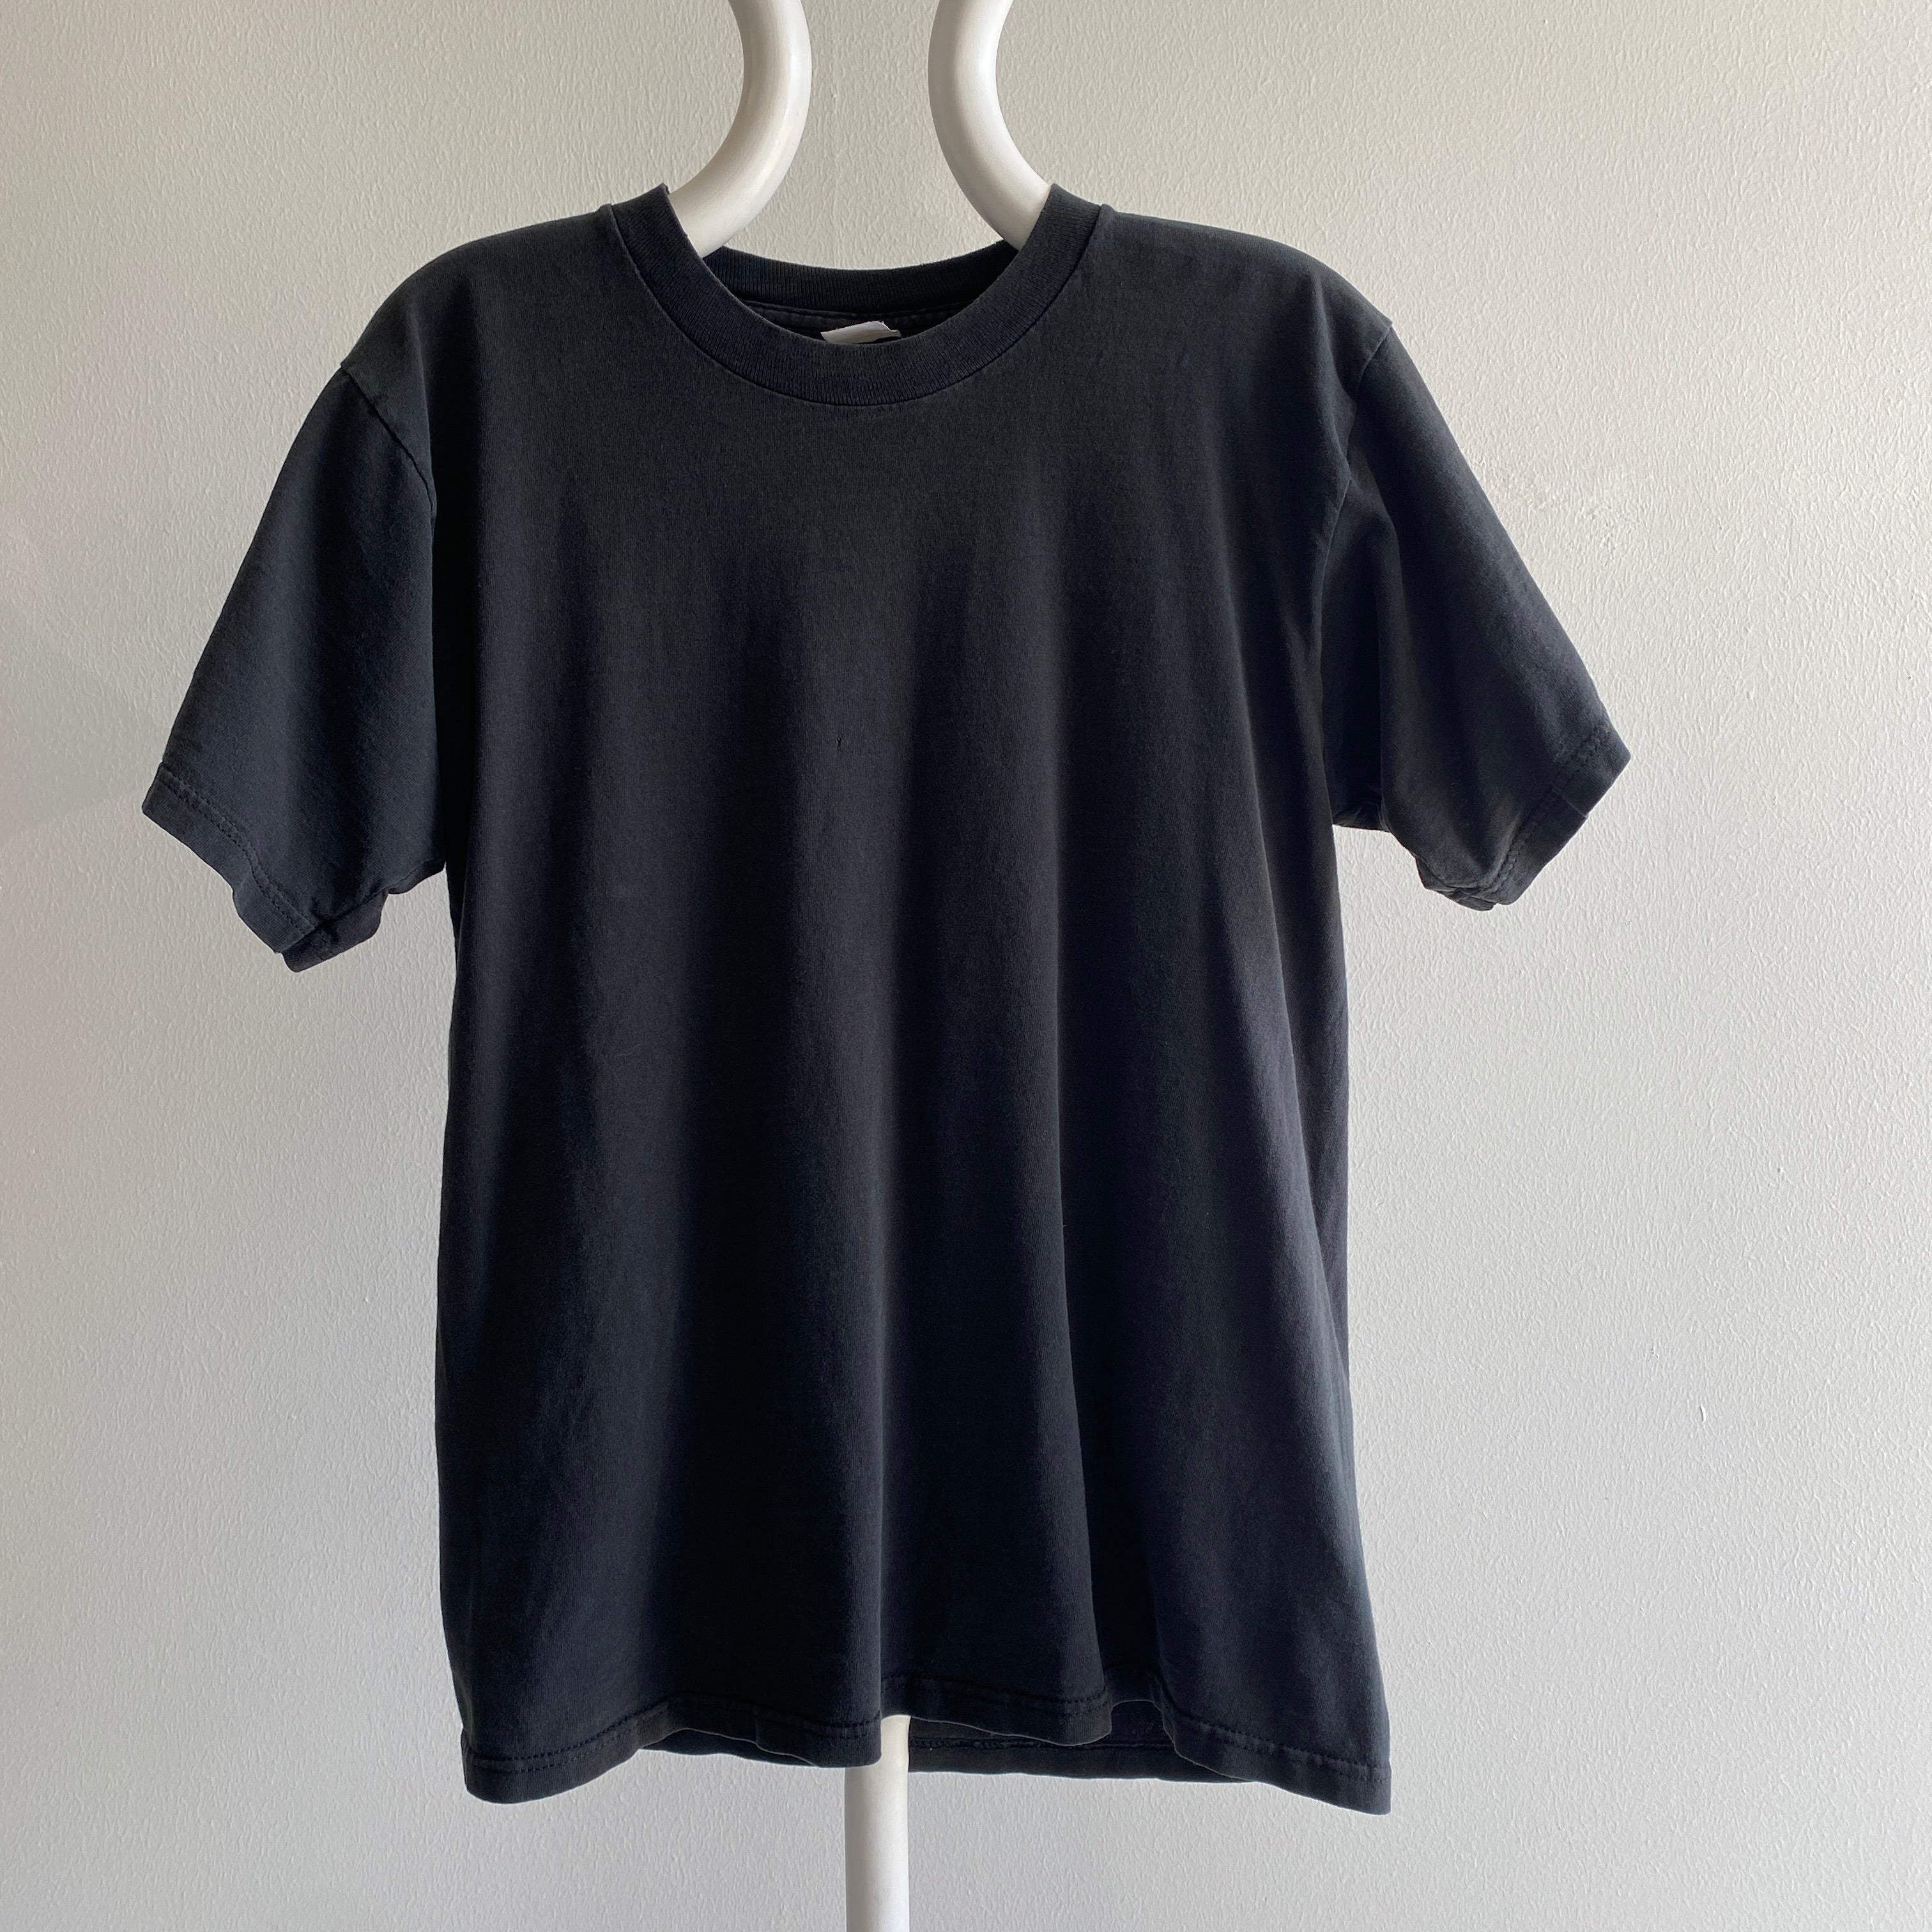 1990s FOTL Faded Black Blank T-Shirt